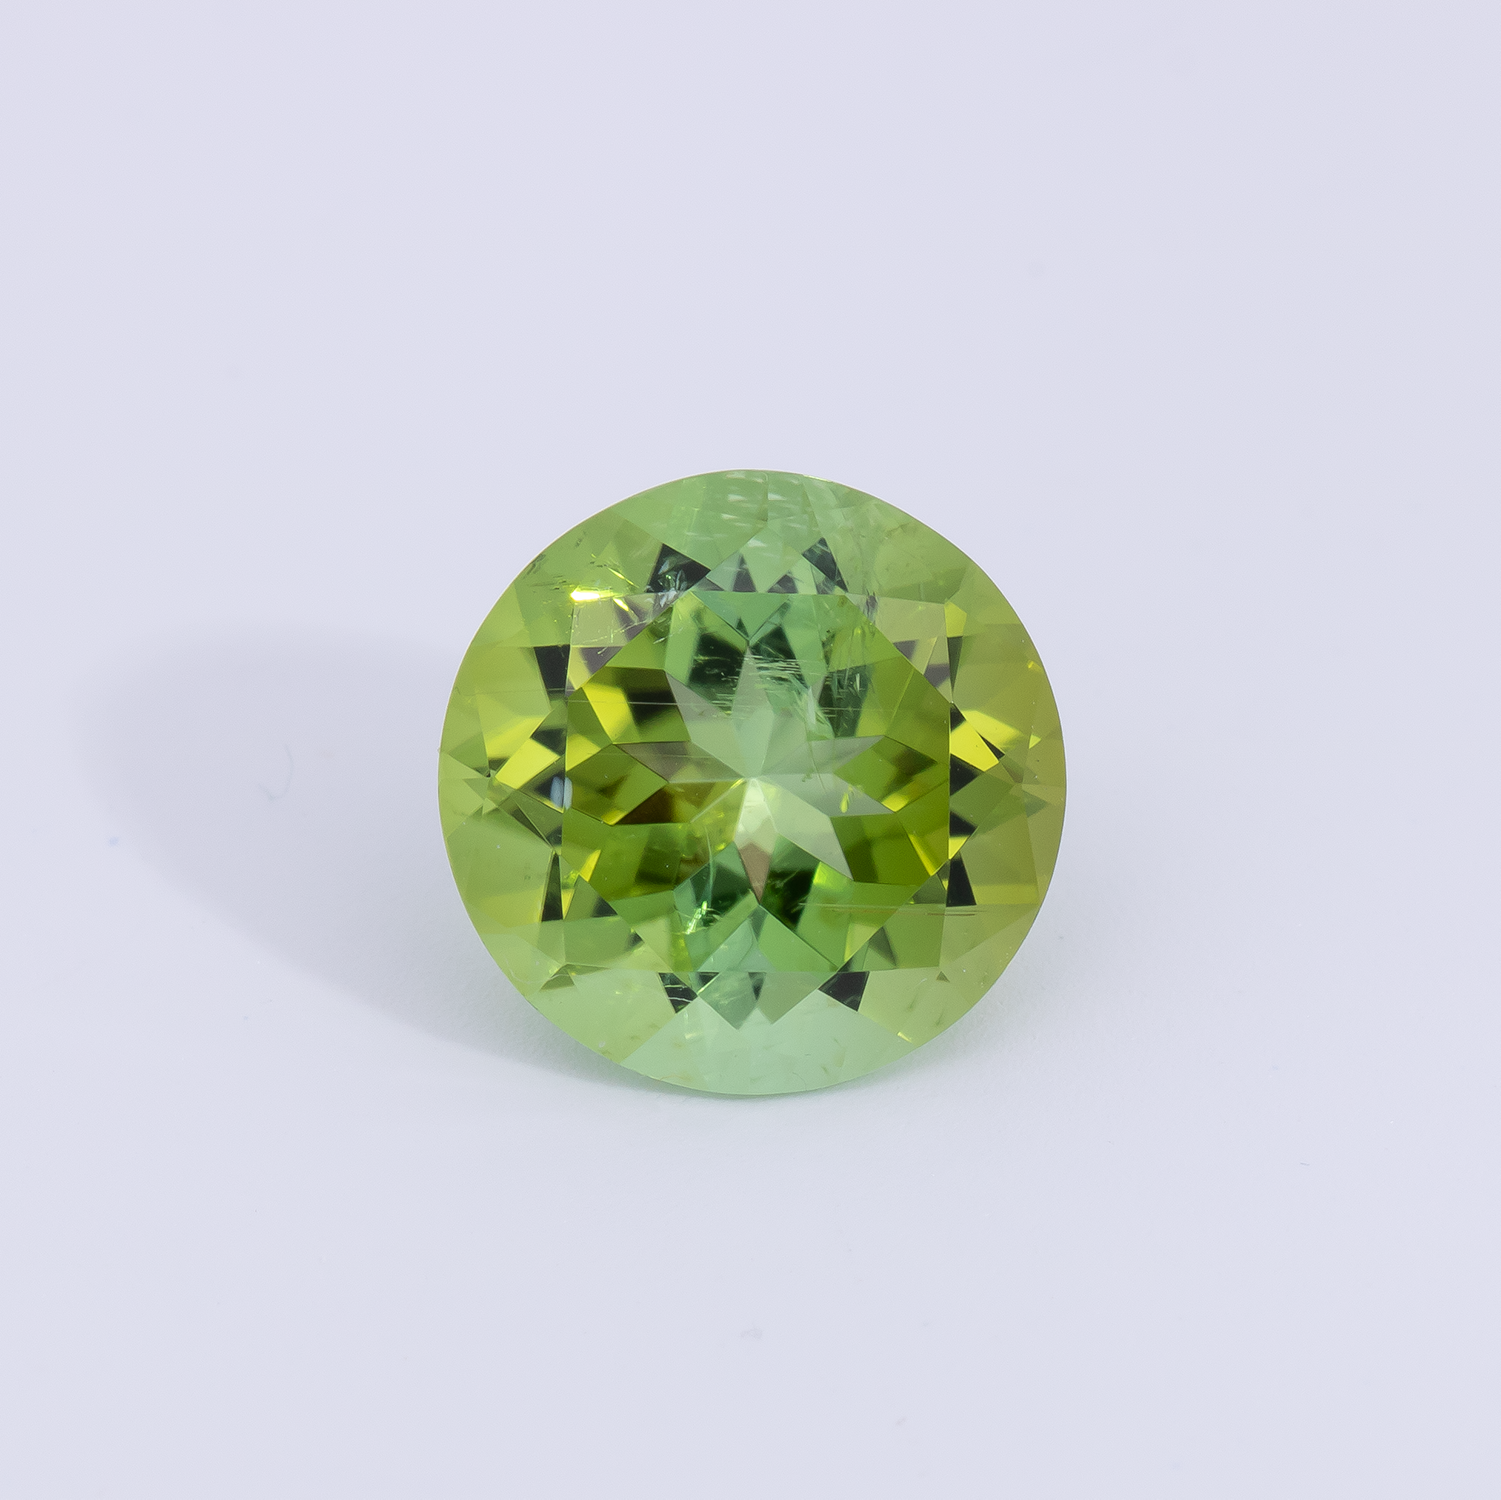 Paraiba Tourmaline - green, round, 9.4x9.4 mm, 3.01 cts, No. PT90020